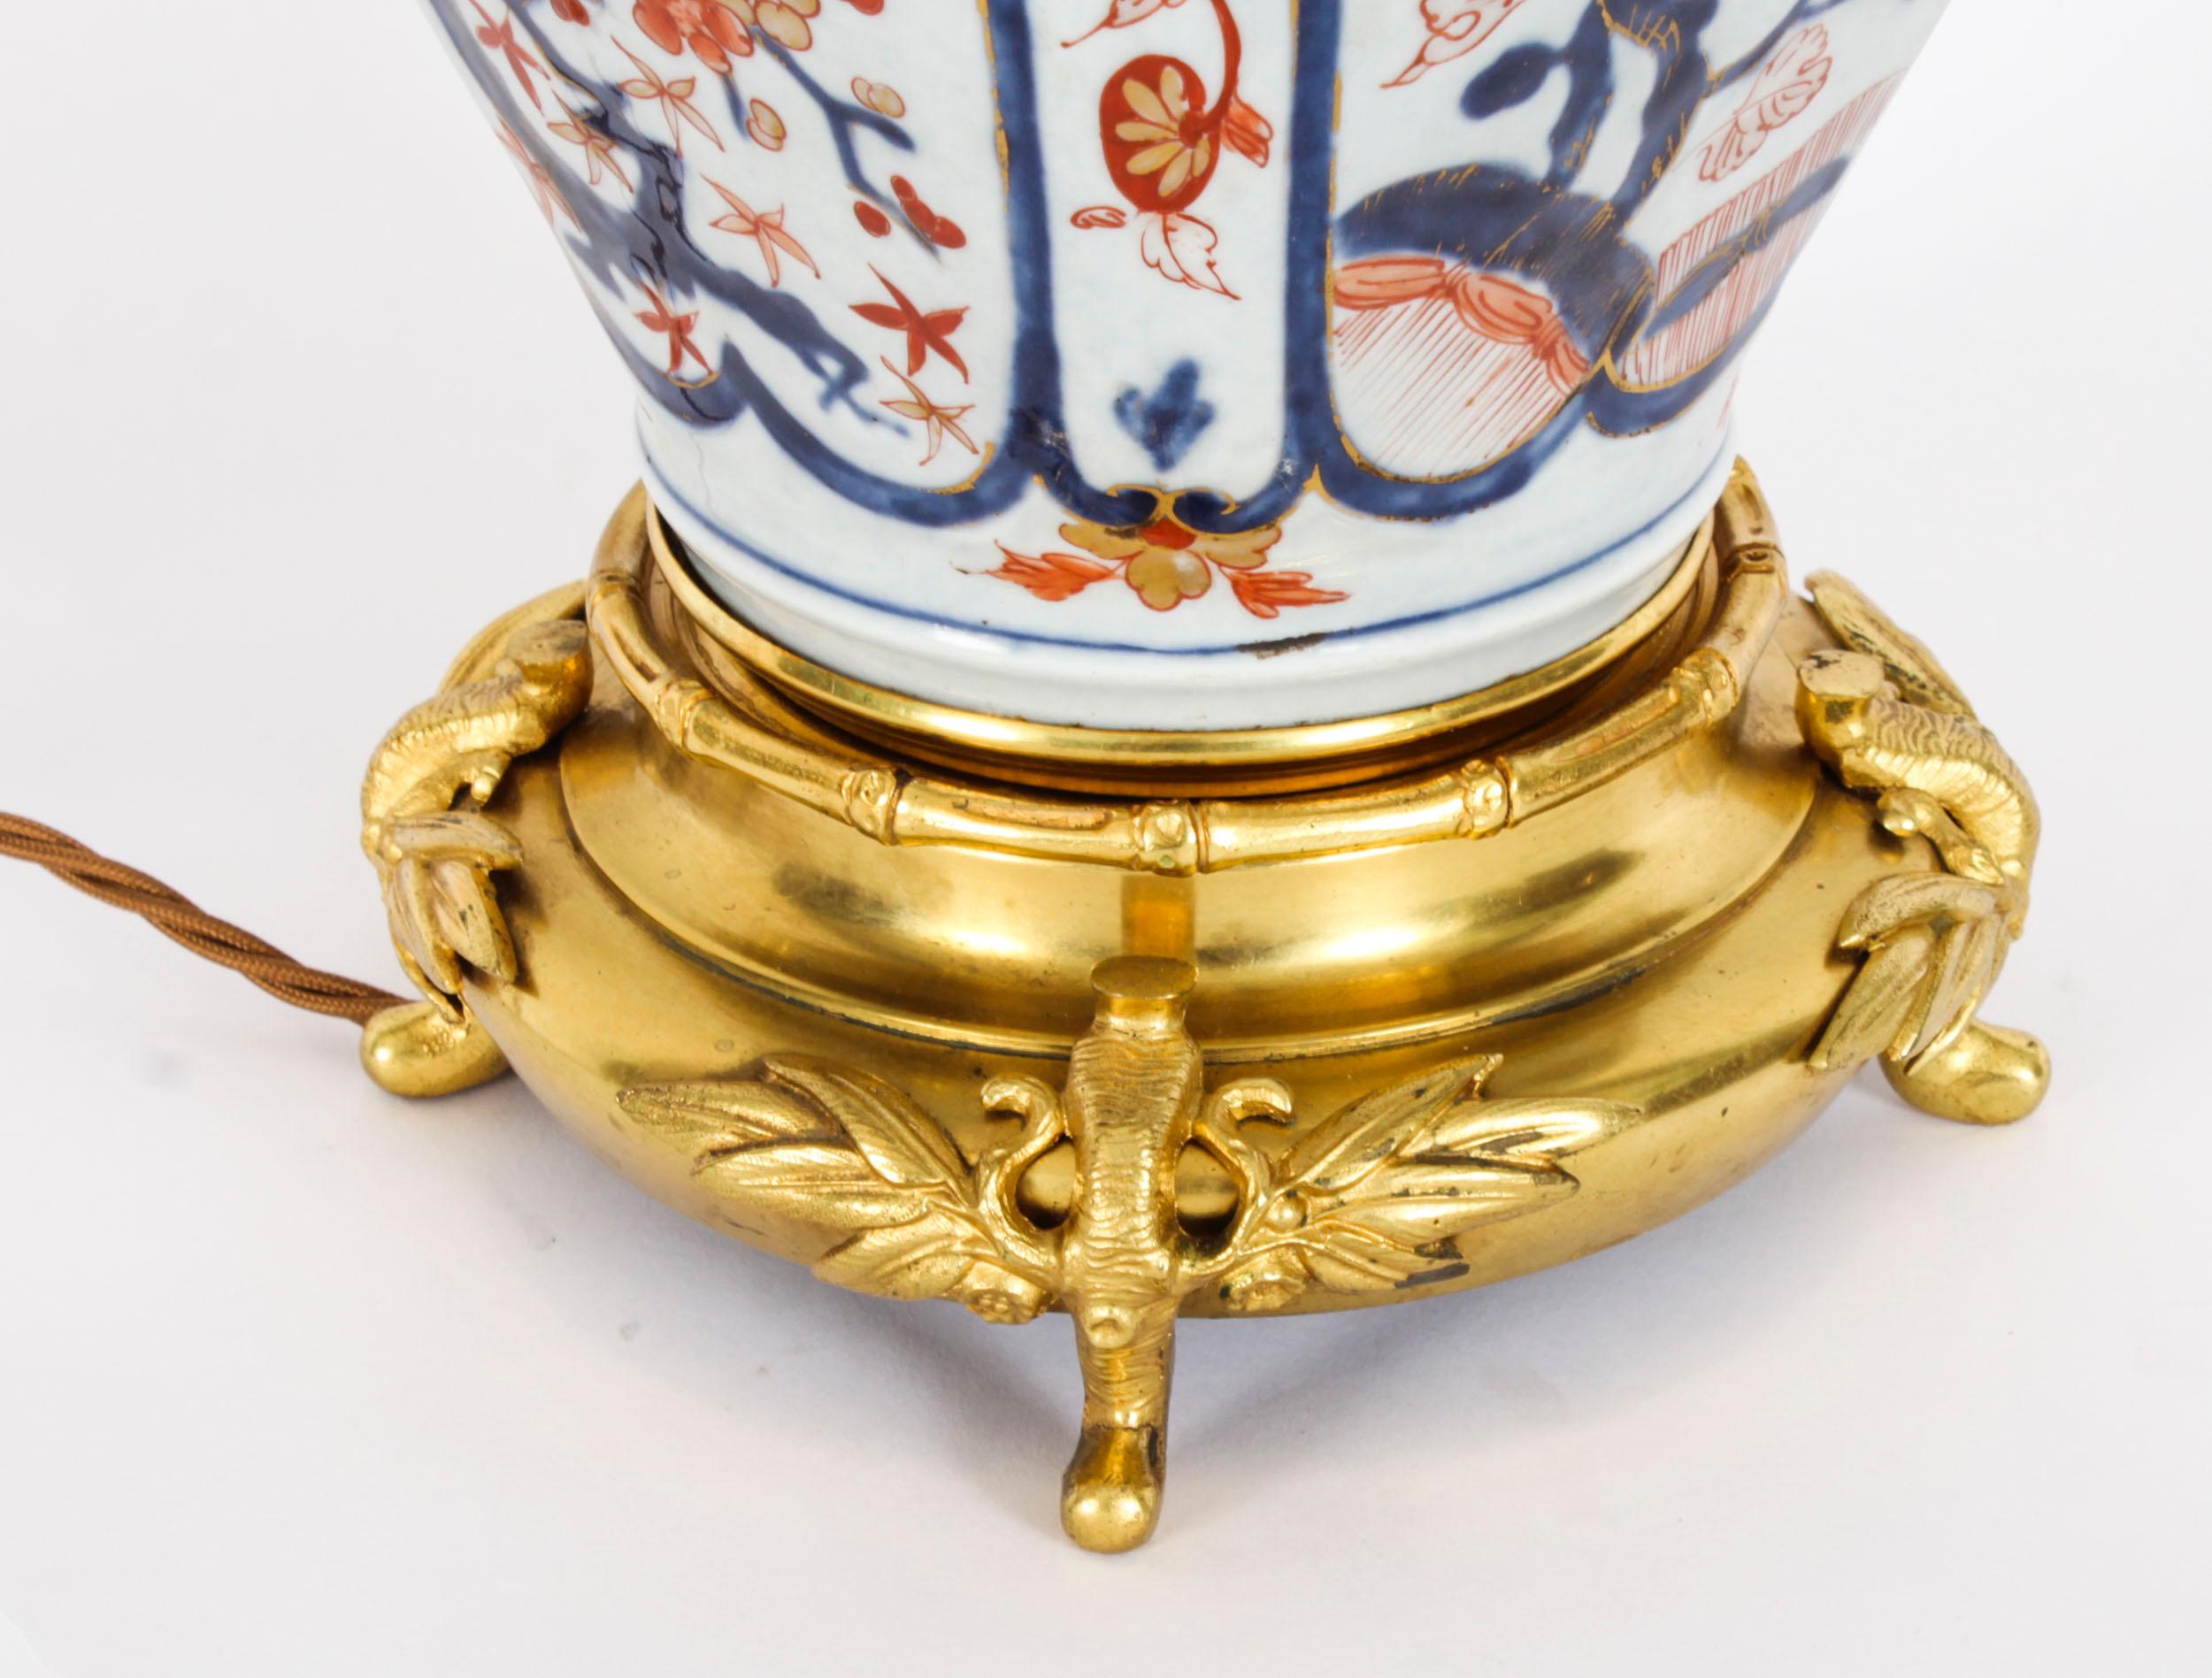 Antique Japanese Imari Porcelain Table Lamp c. 1840 19th Century For Sale 2